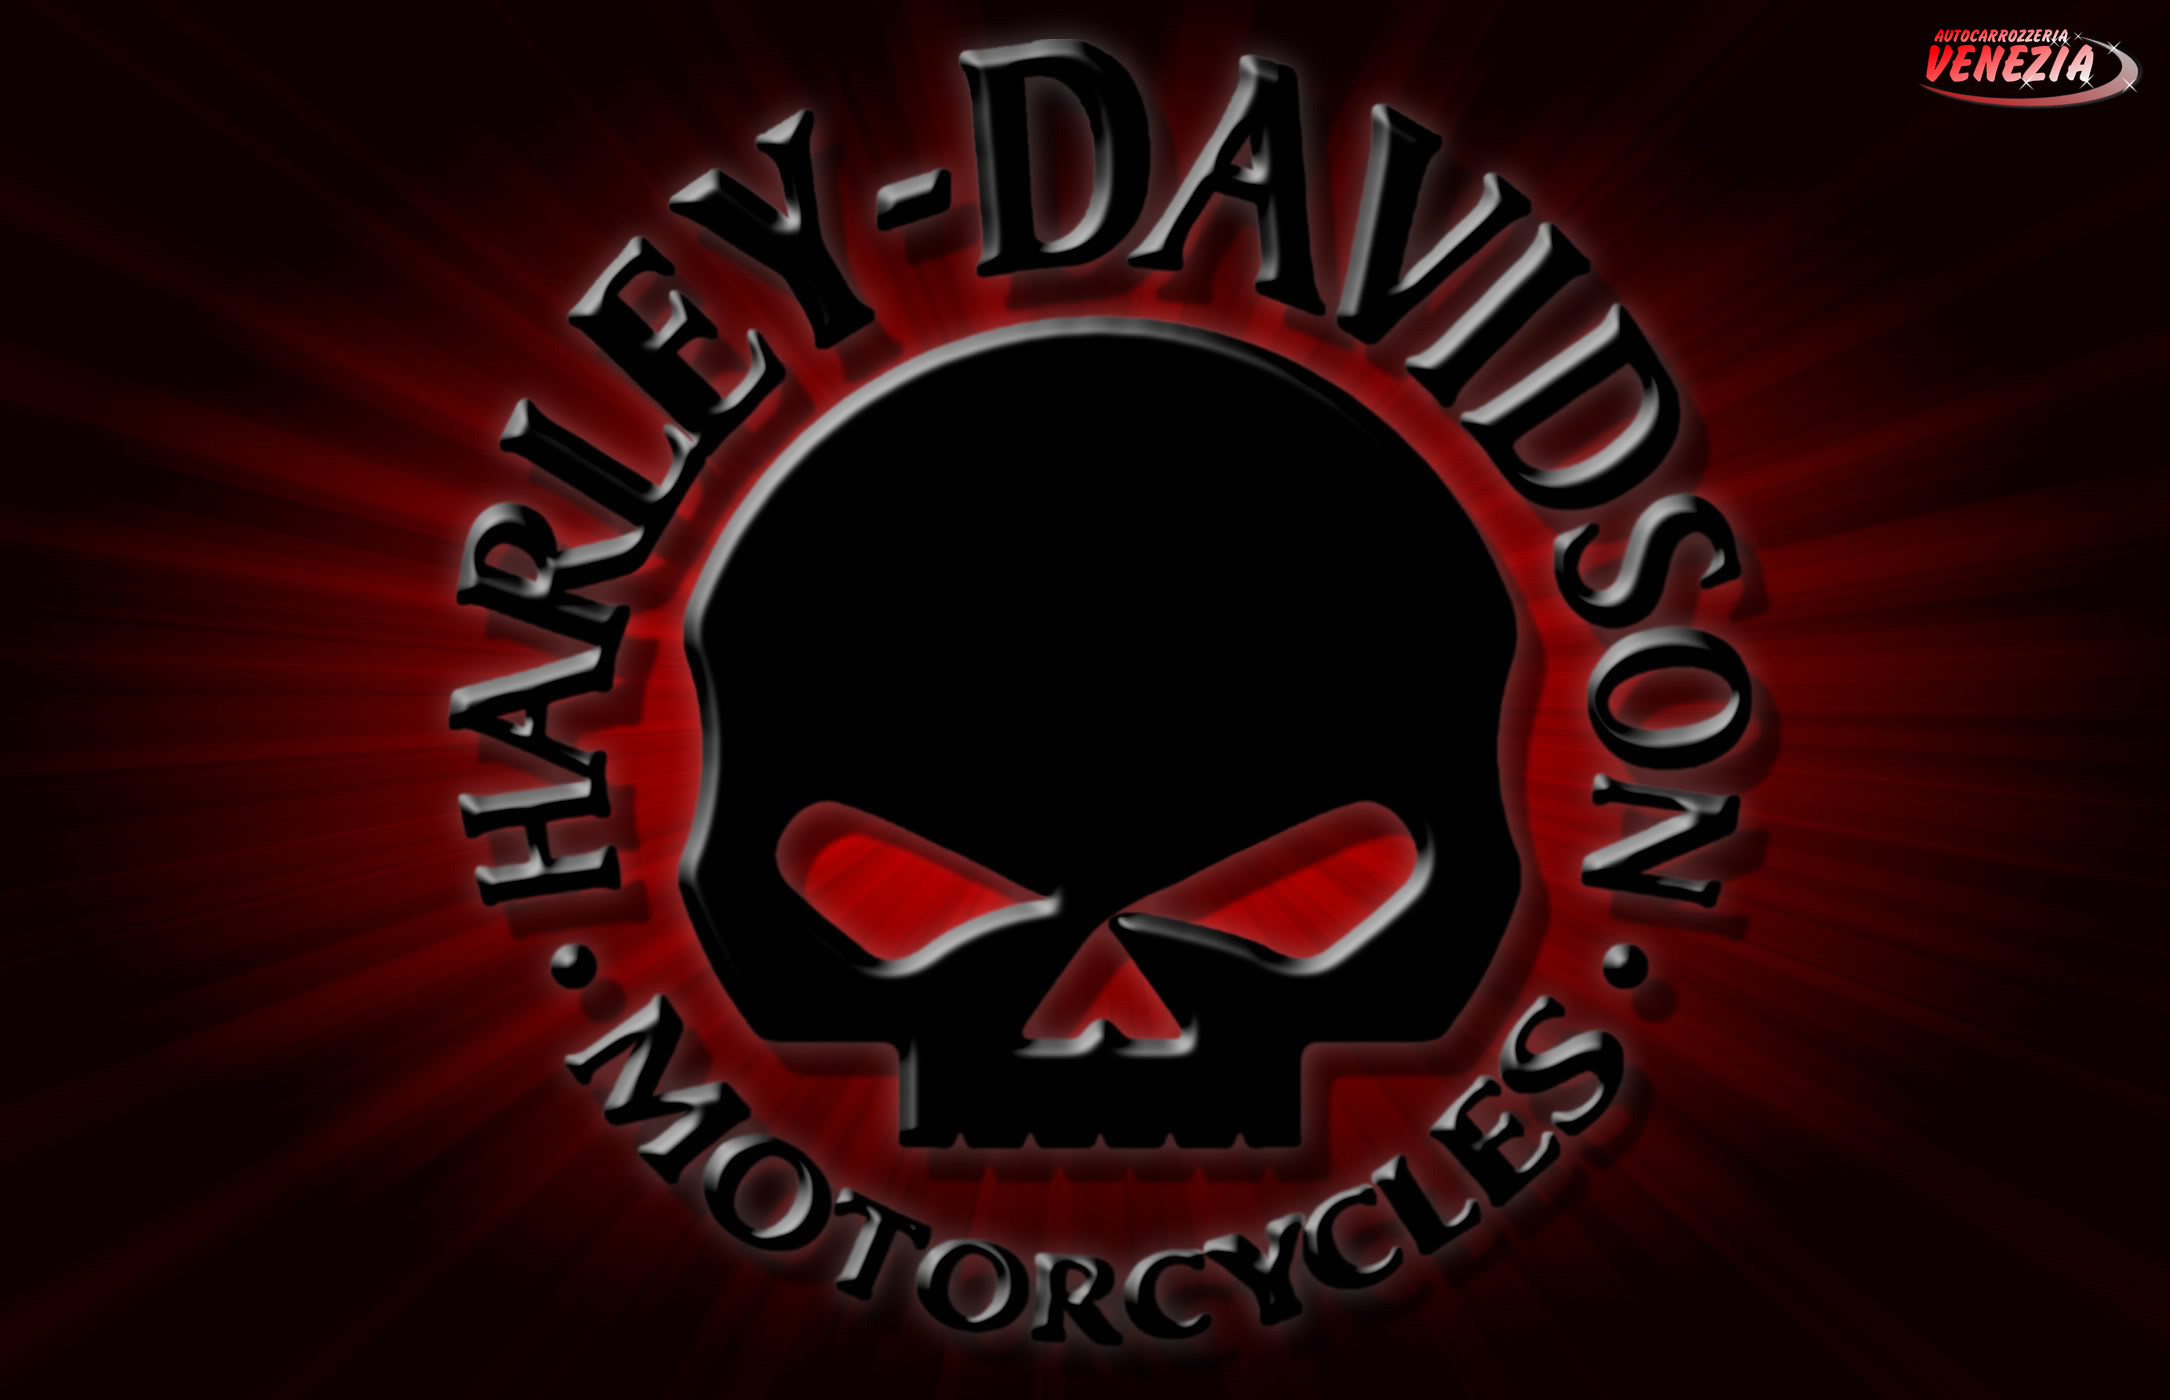 2170x1400 Harley Davidson 0 HTML code. New IPAD Harley wallpaper ...